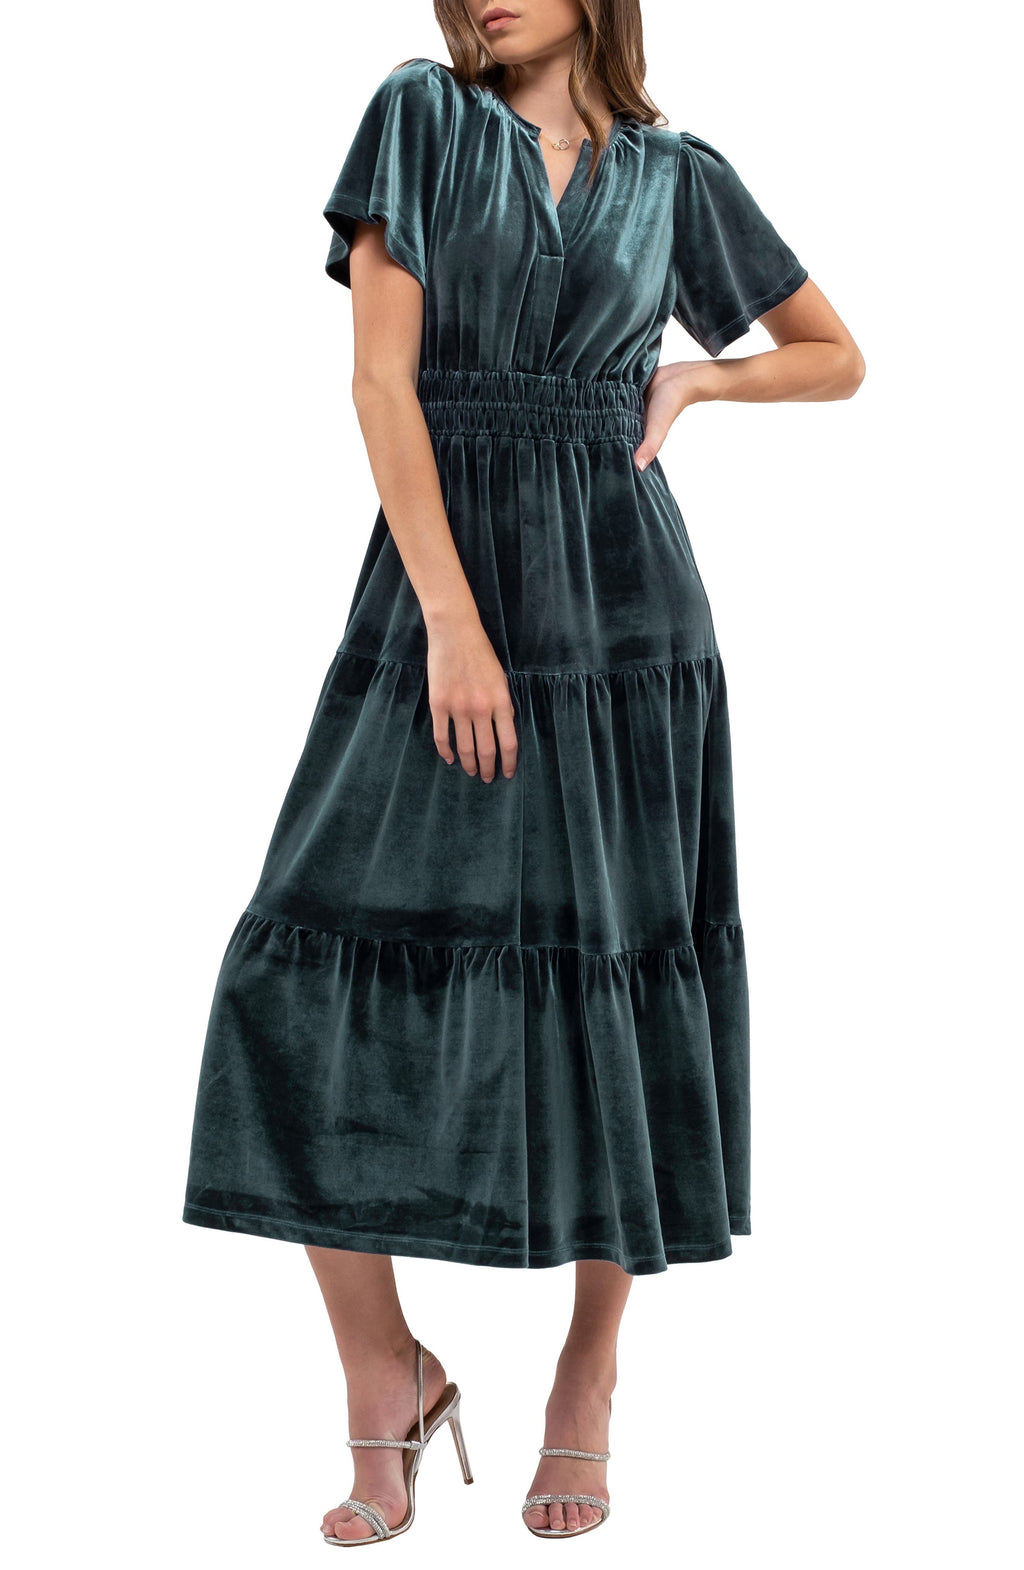 AUGUST SKY Velvet Tiered Maxi Dress, Main, color, DUSTY BLUE